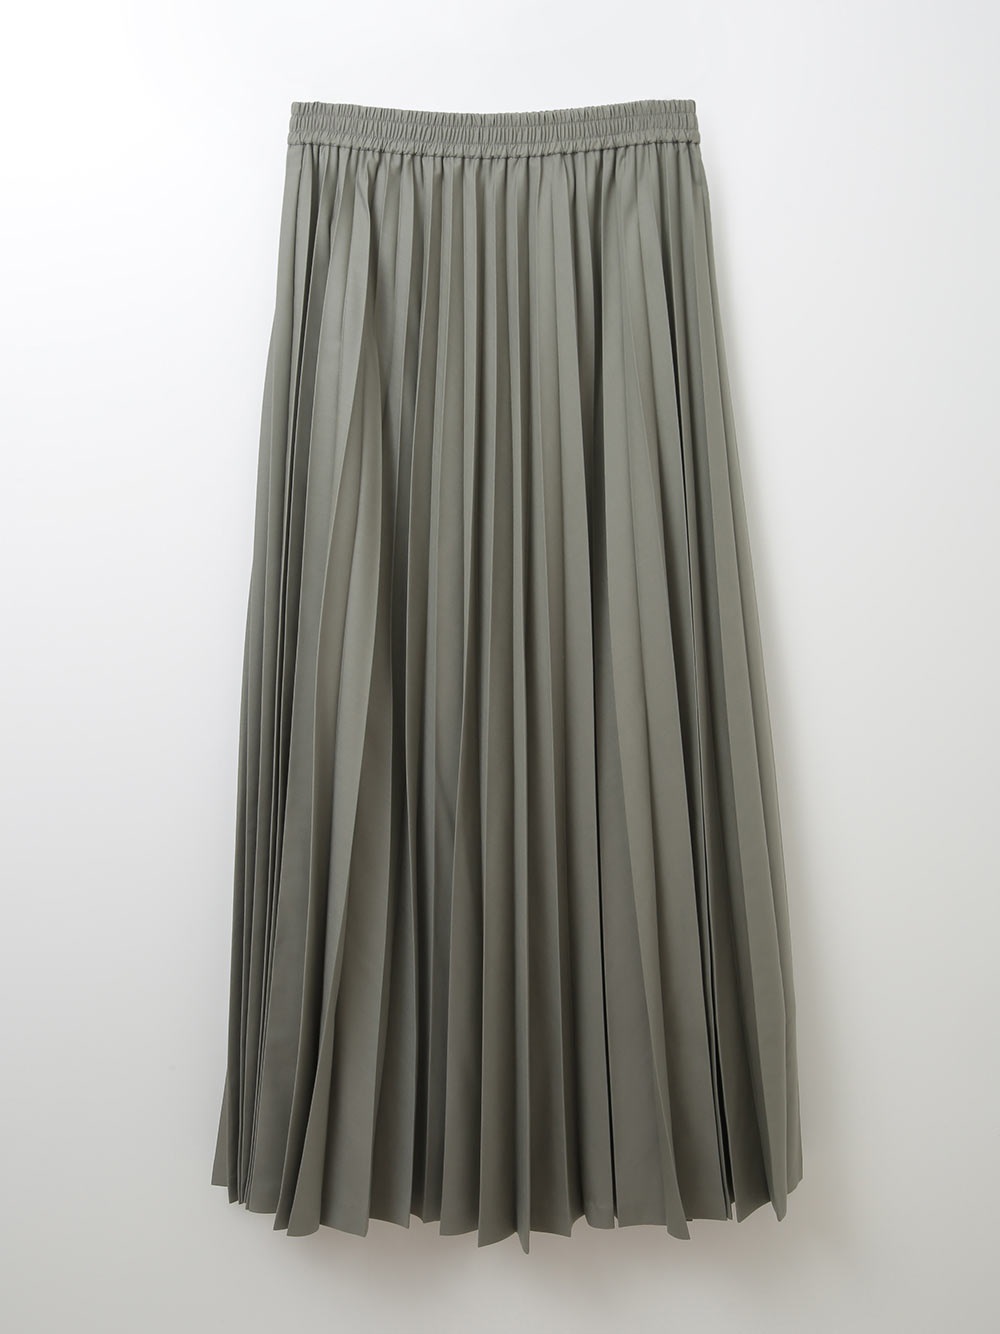 Pleated Skirt(62ライトグリーン-フリー)